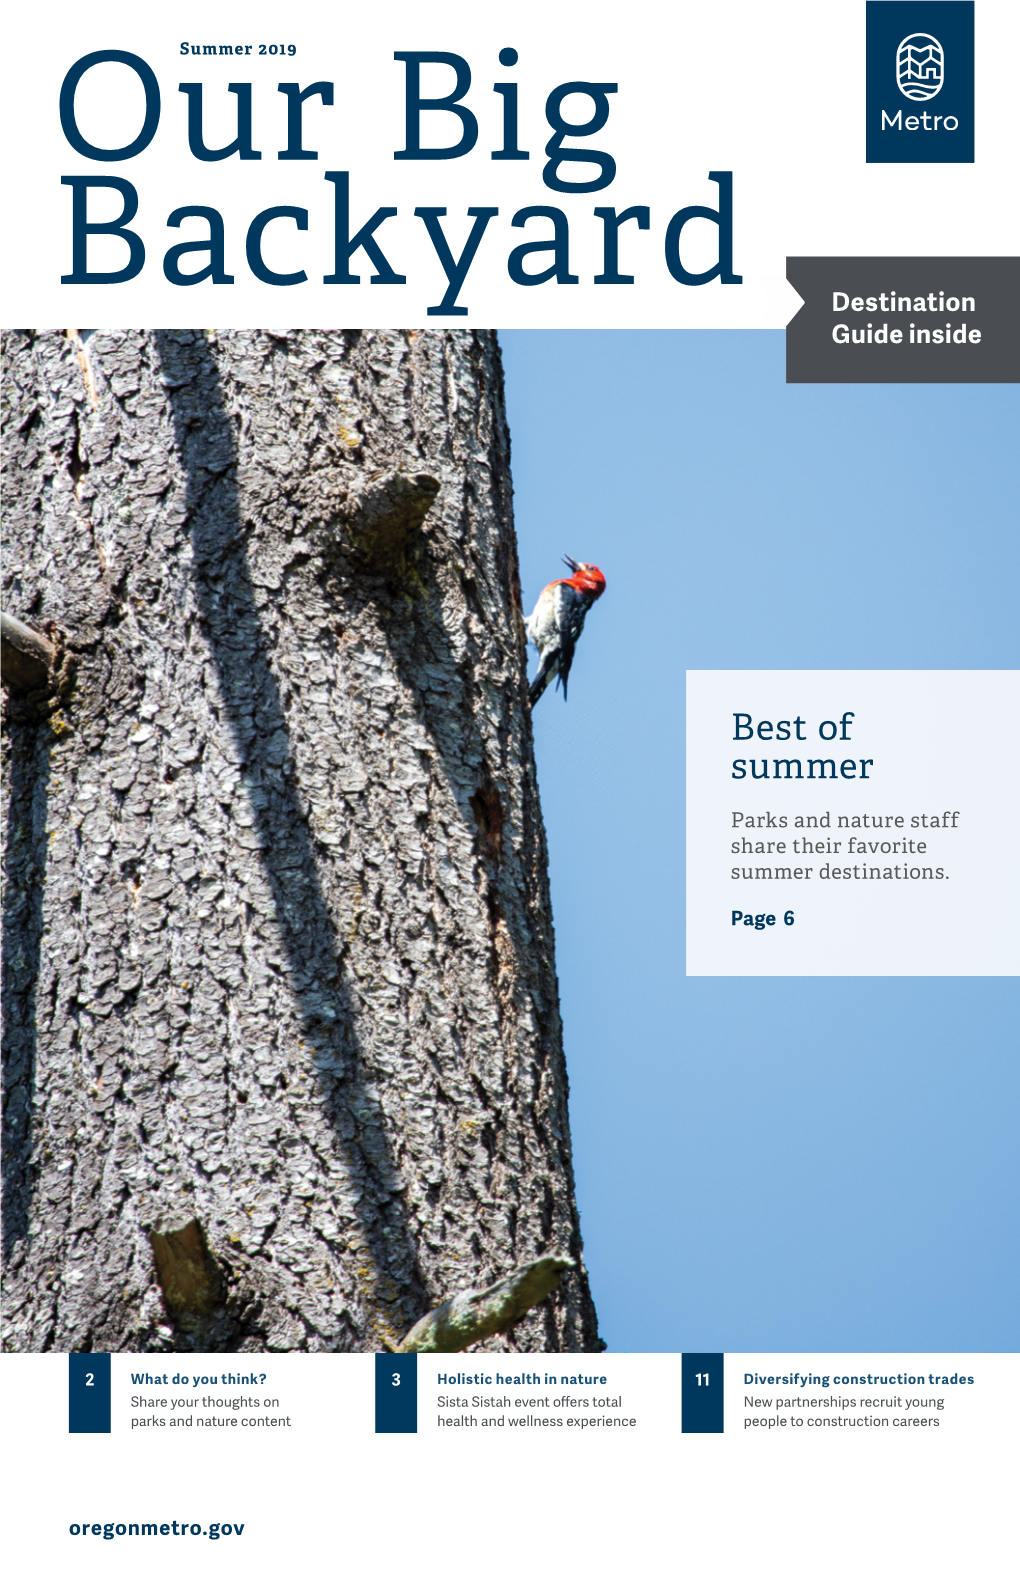 Our Big Backyard: Summer 2019 Jun 2019 PDF Open